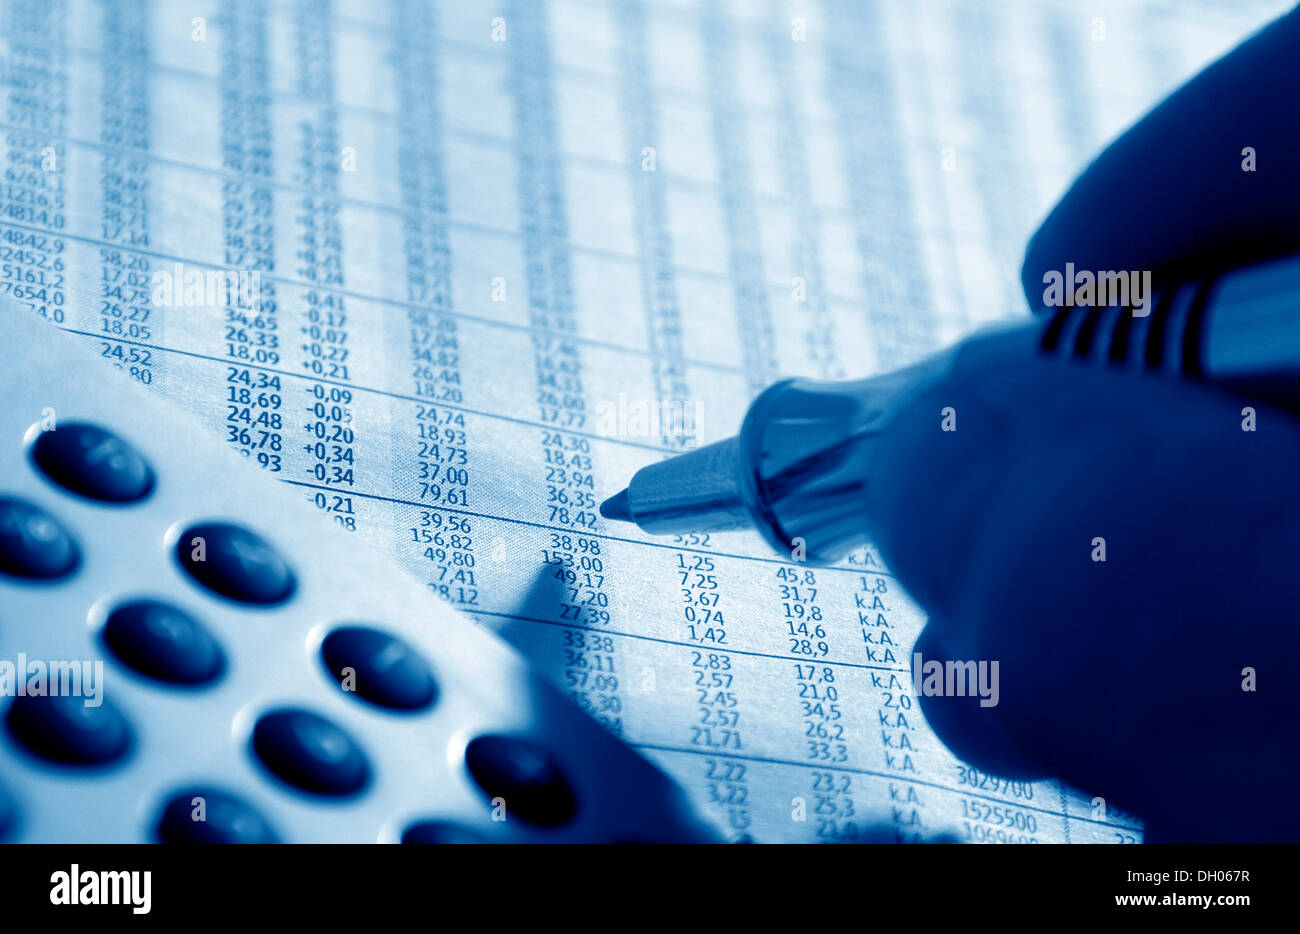 Pen marking stock prices, financial markets, stock exchange Stock Photo